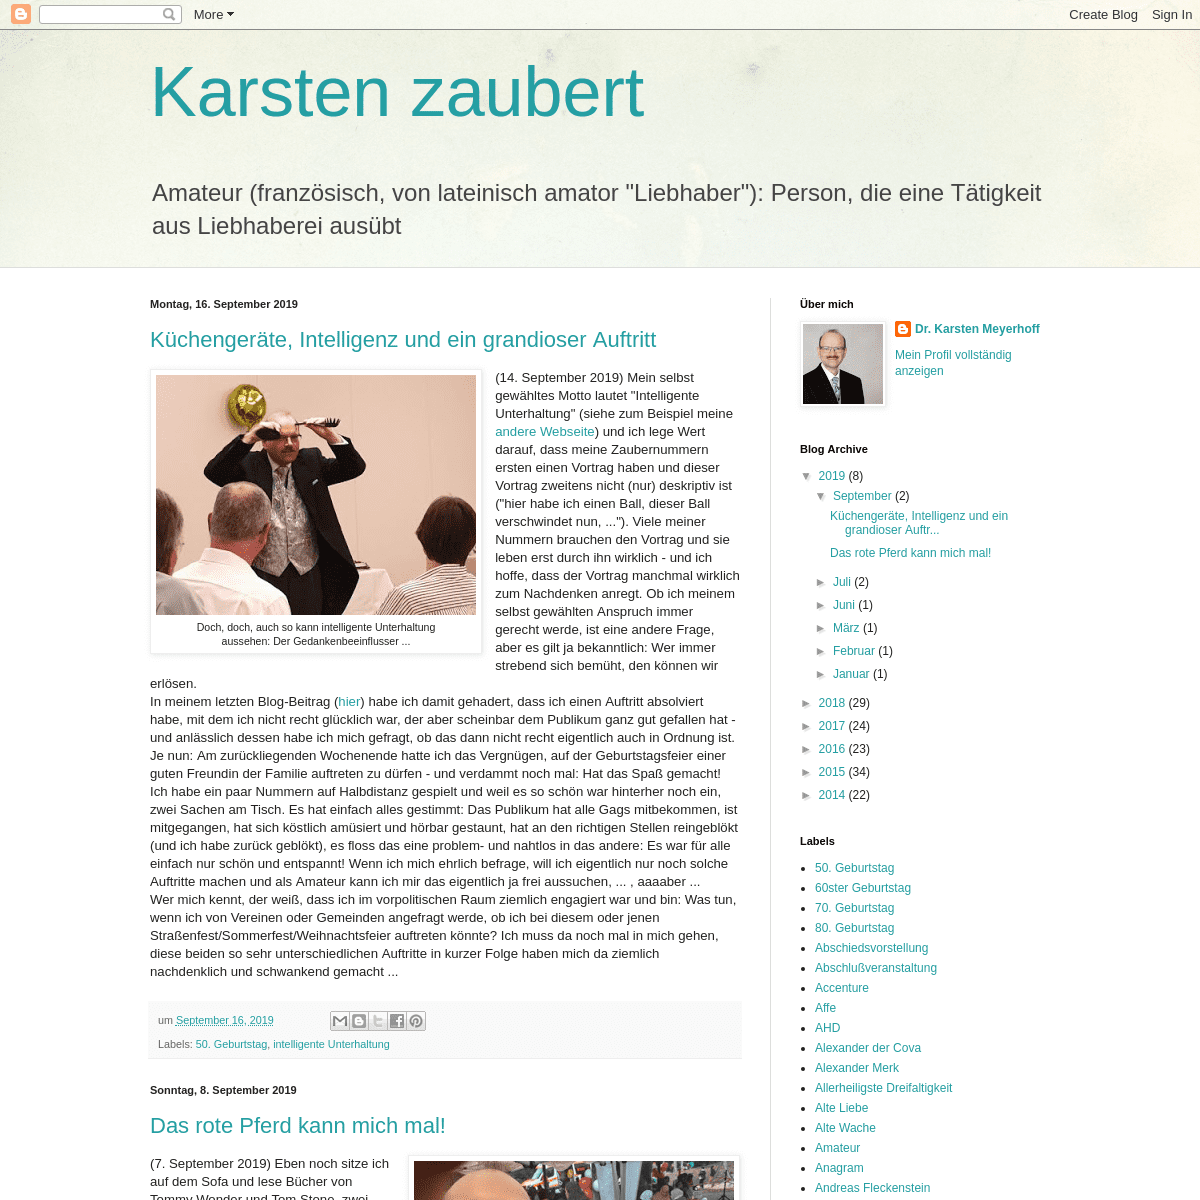 A complete backup of karstenzaubert.blogspot.com